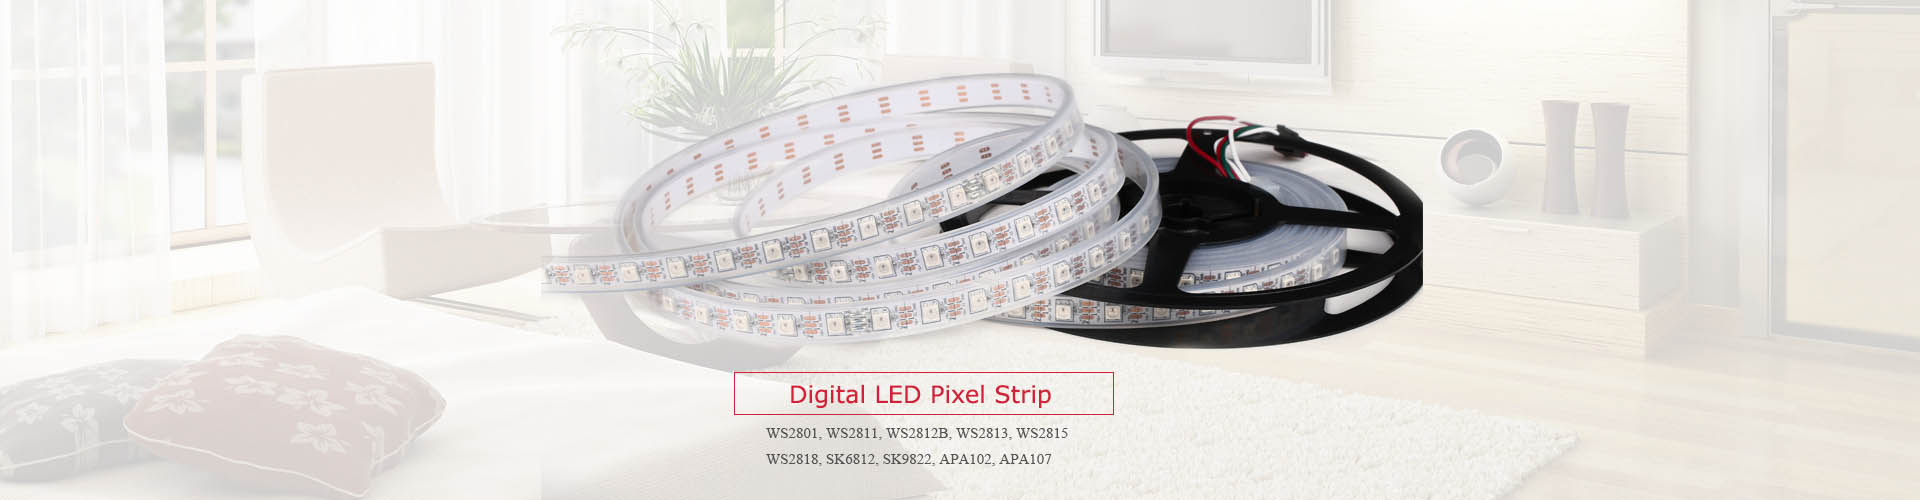 LED Pixel Strip, APA102, APA107, SK9822, WS2811, WS2812, WS2812B,WS2813,WS2815,WS2818,SK6812,SK9822,WS2801,UCS1903,LED Strip Light,RGB LED Strip,Digital RGB Strip,Smart LED Strip,RGB Pixel Strip,LED Tape